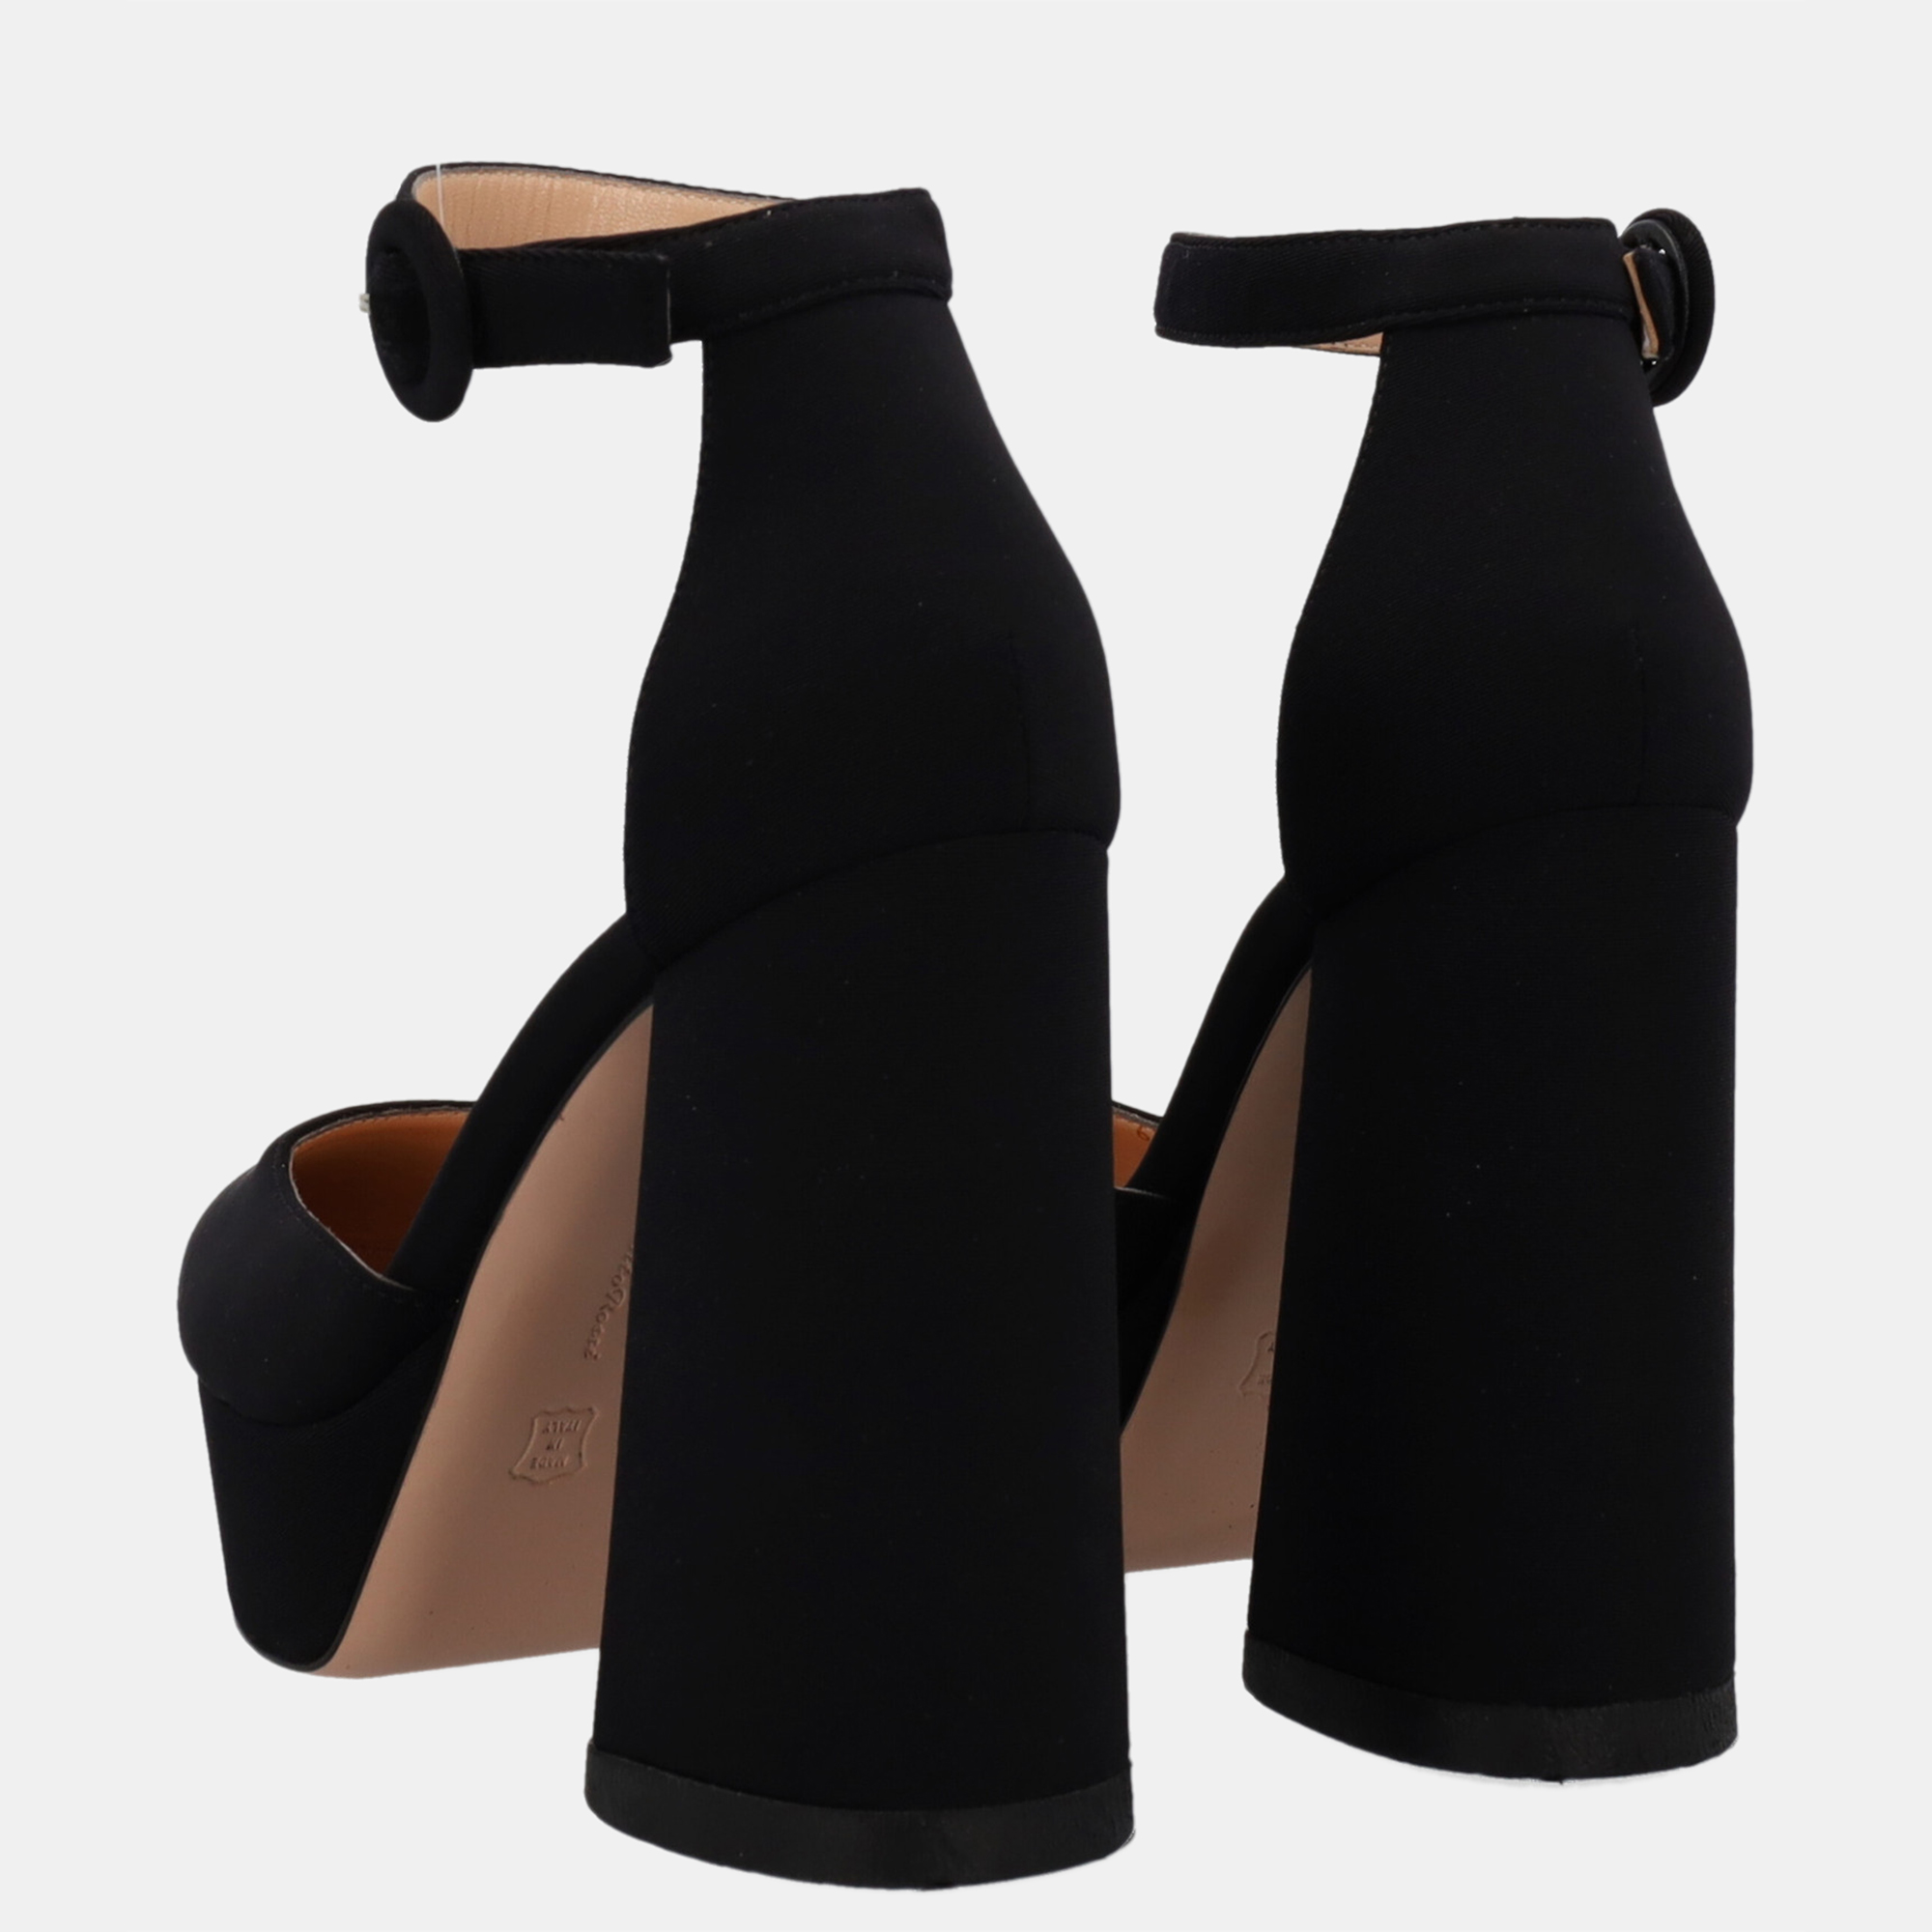 Gianvito Rossi  Women's Fabric Heels - Black - EU 35